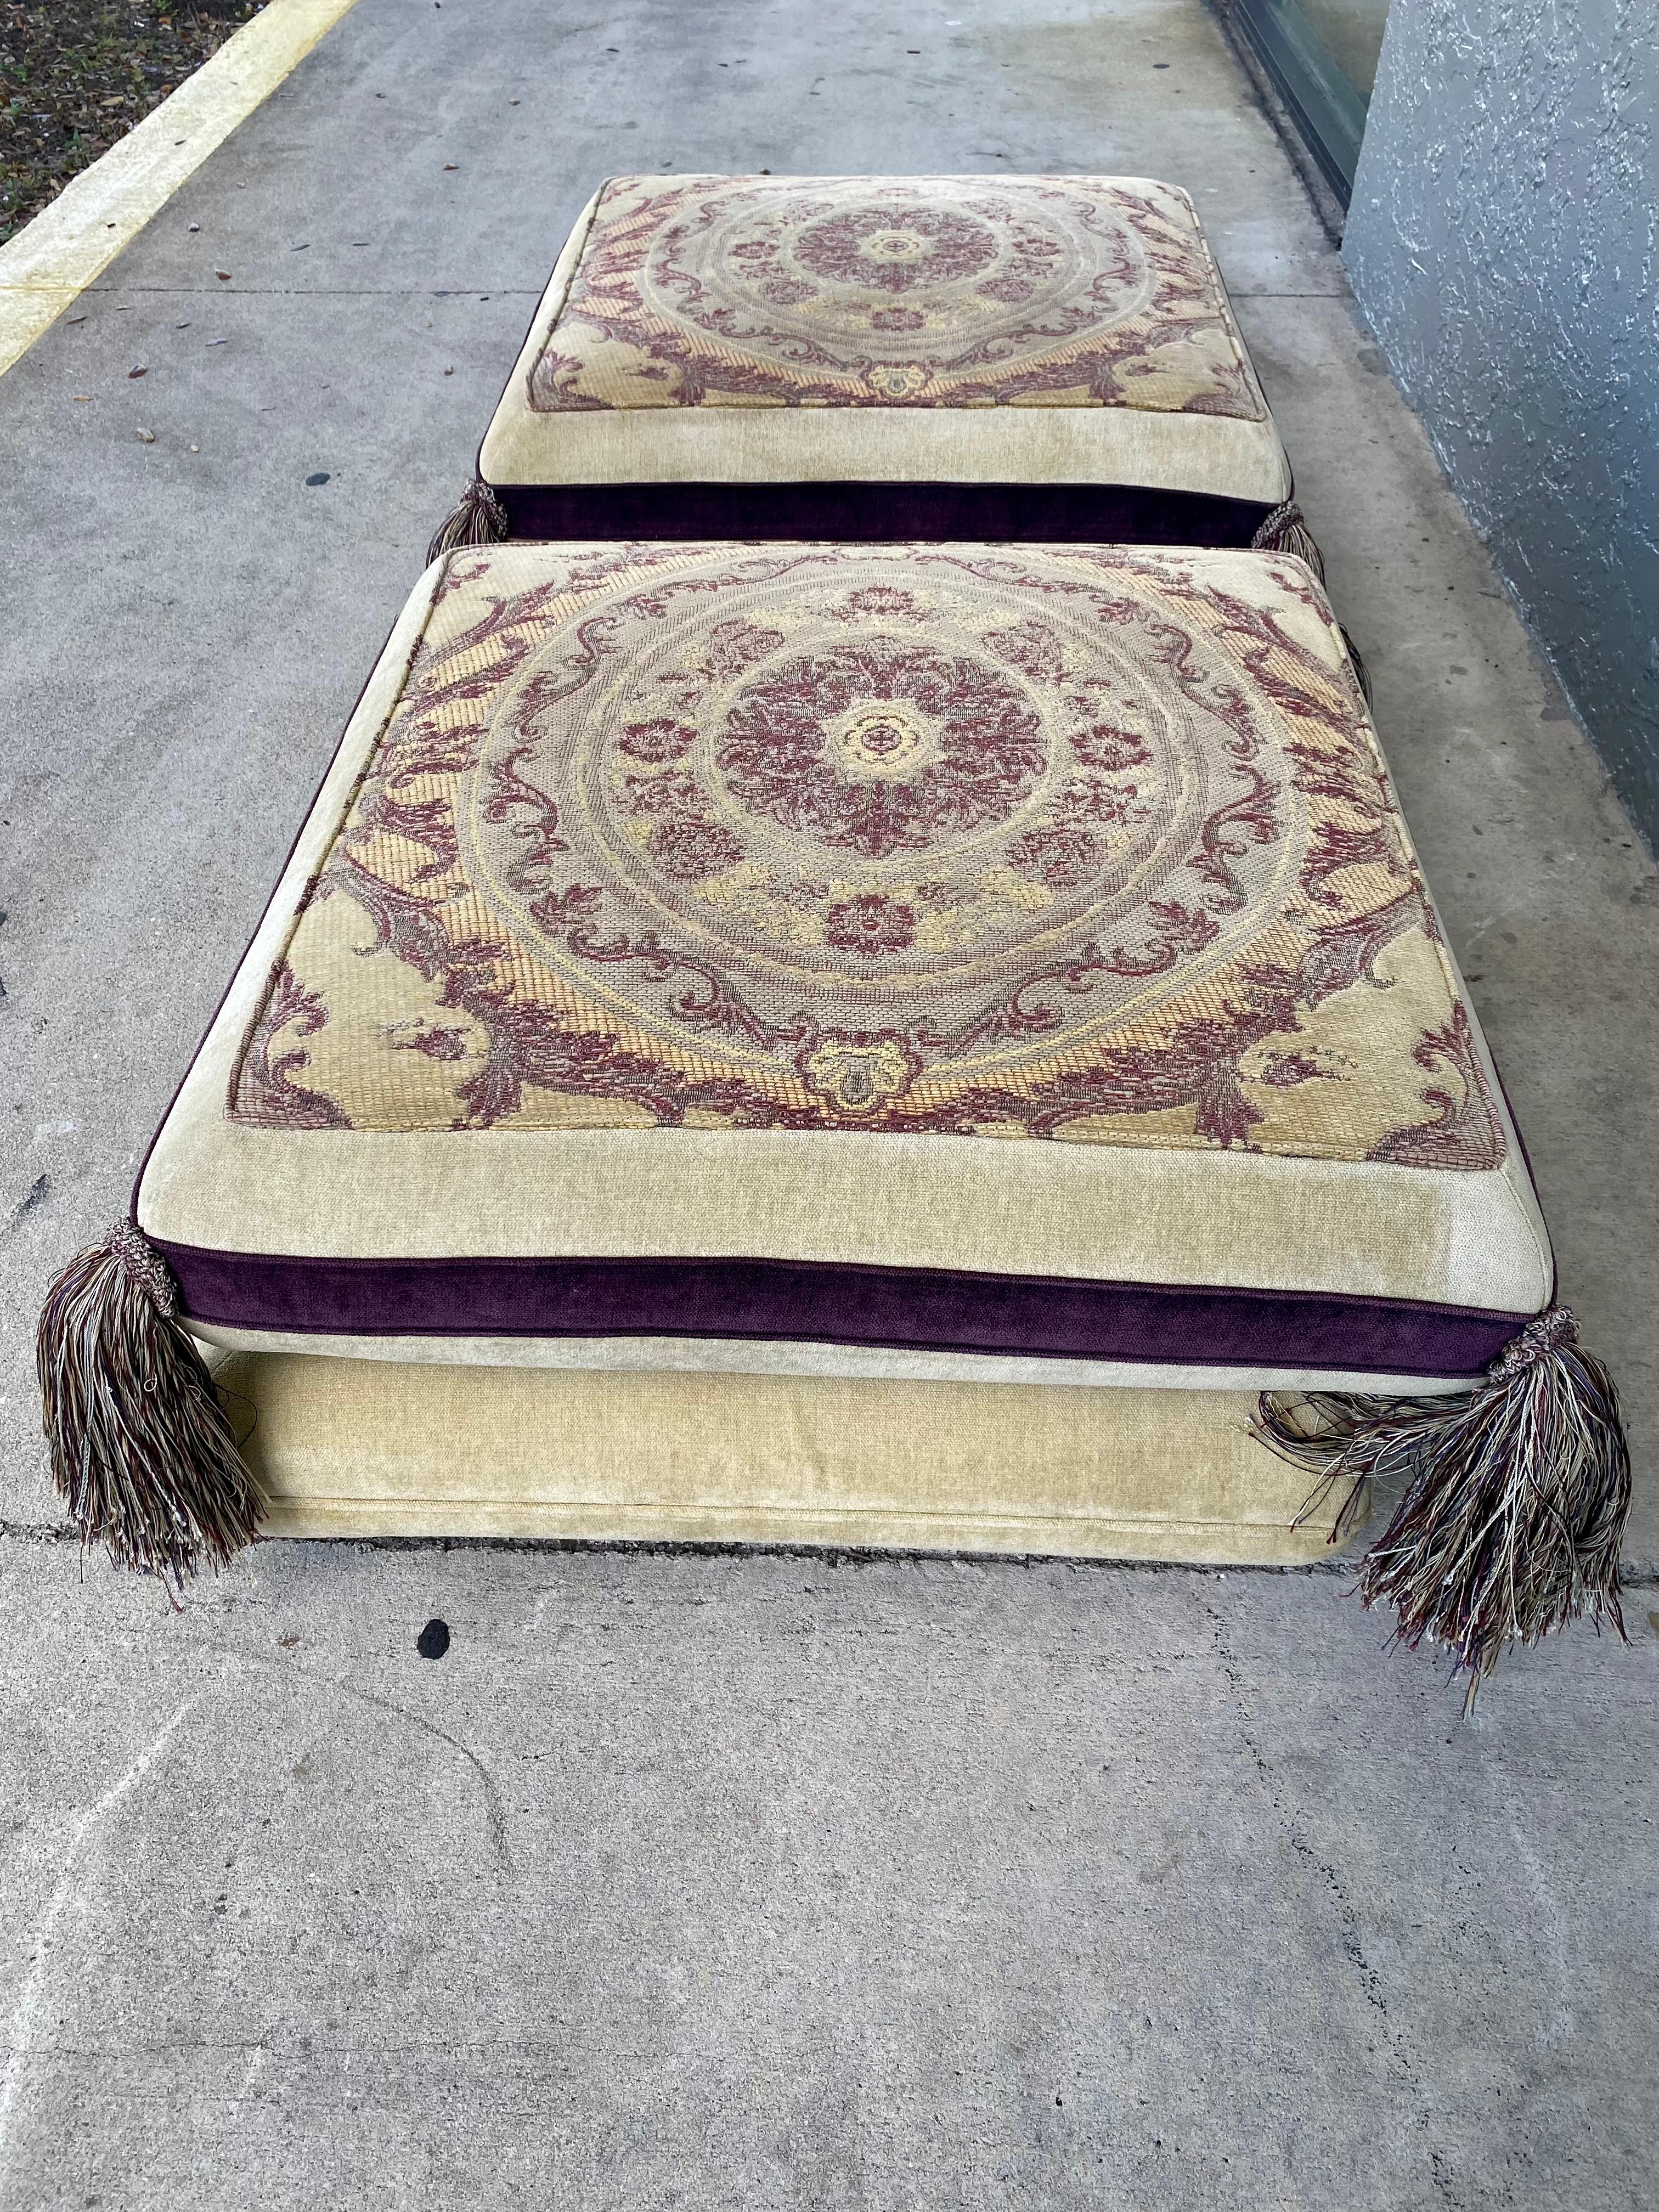 Rare Roche Bobois “Mah Jong” Style Floor Pillowtop Ottoman Stools, Set of 2 For Sale 3